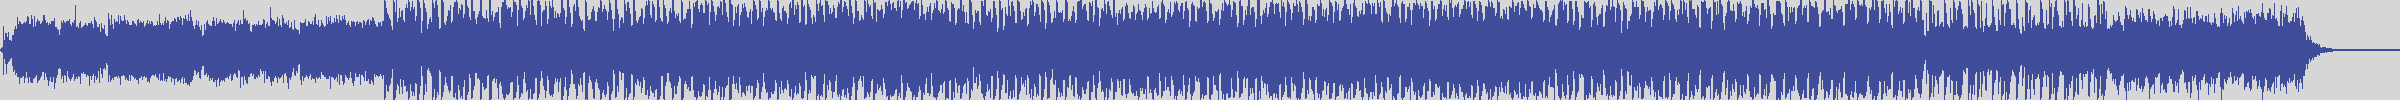 vitti_records [VIT020] Hic - Copper [Original Mix] audio wave form